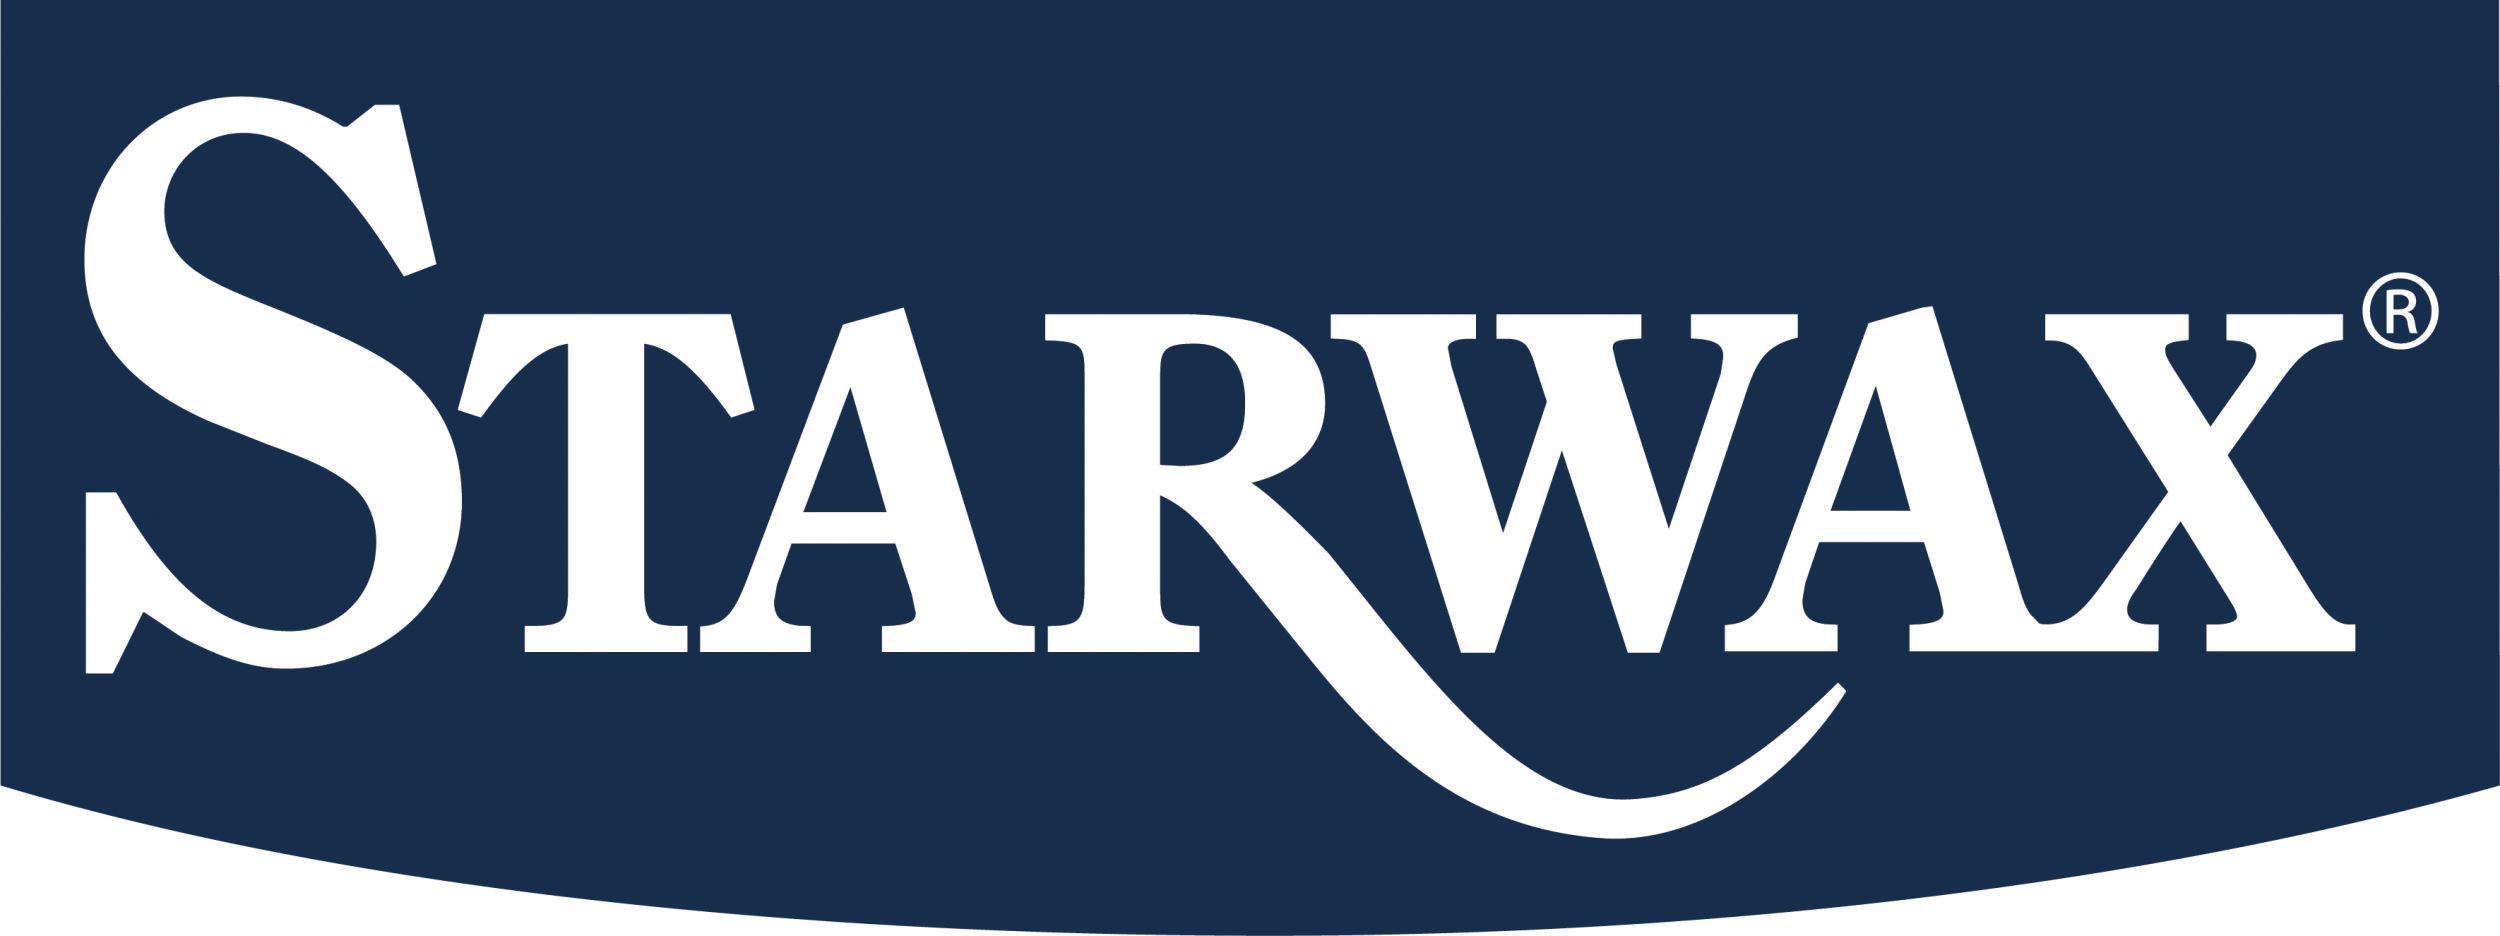 Logo Starwax